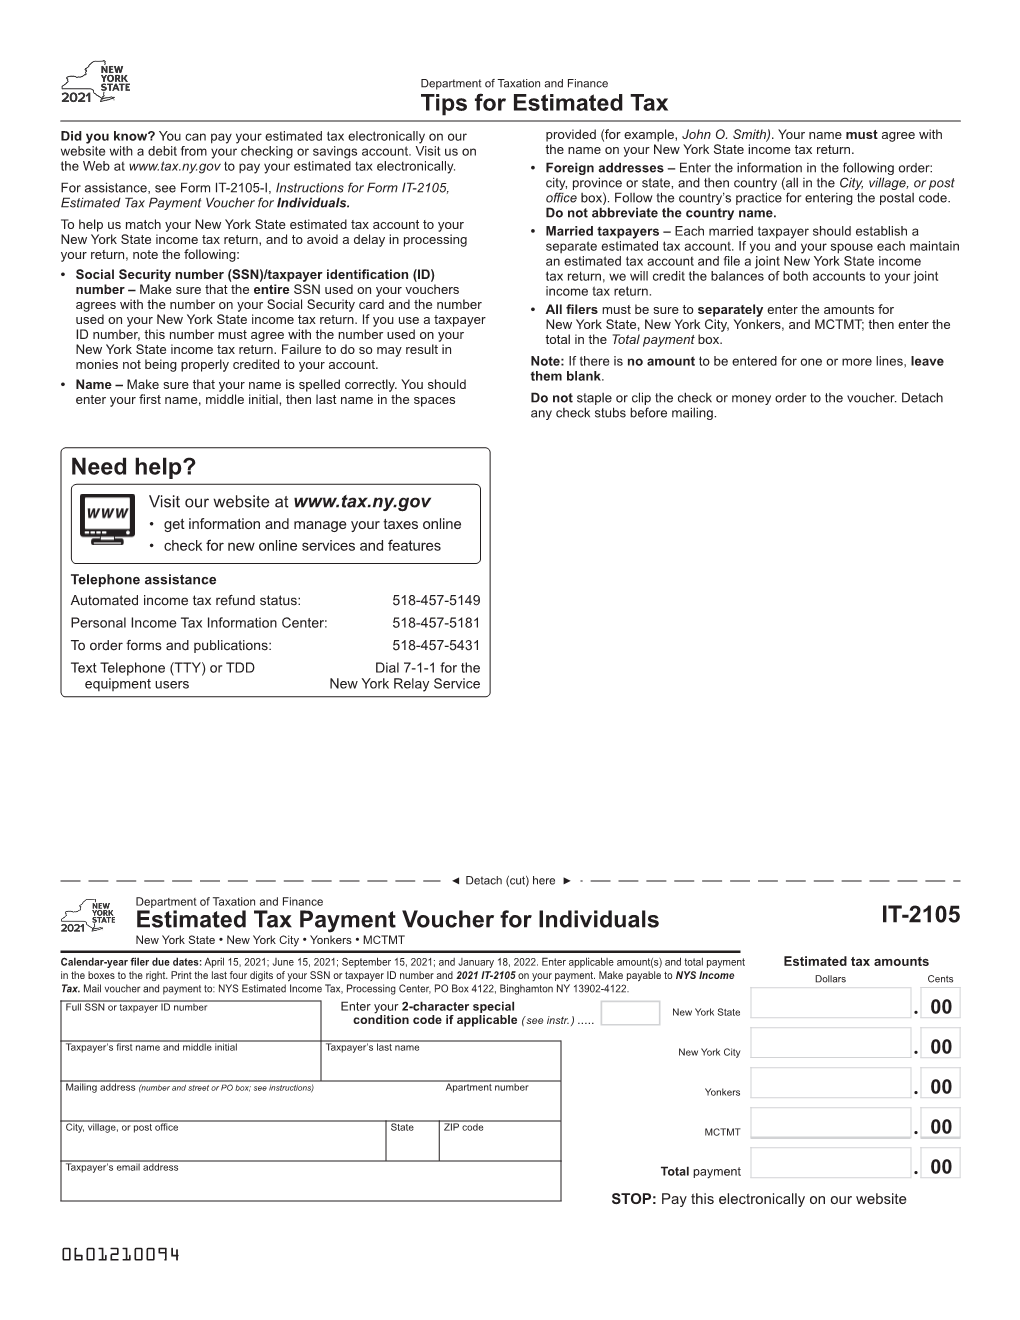 Form IT-2105, Estimated Income Tax Payment Voucher